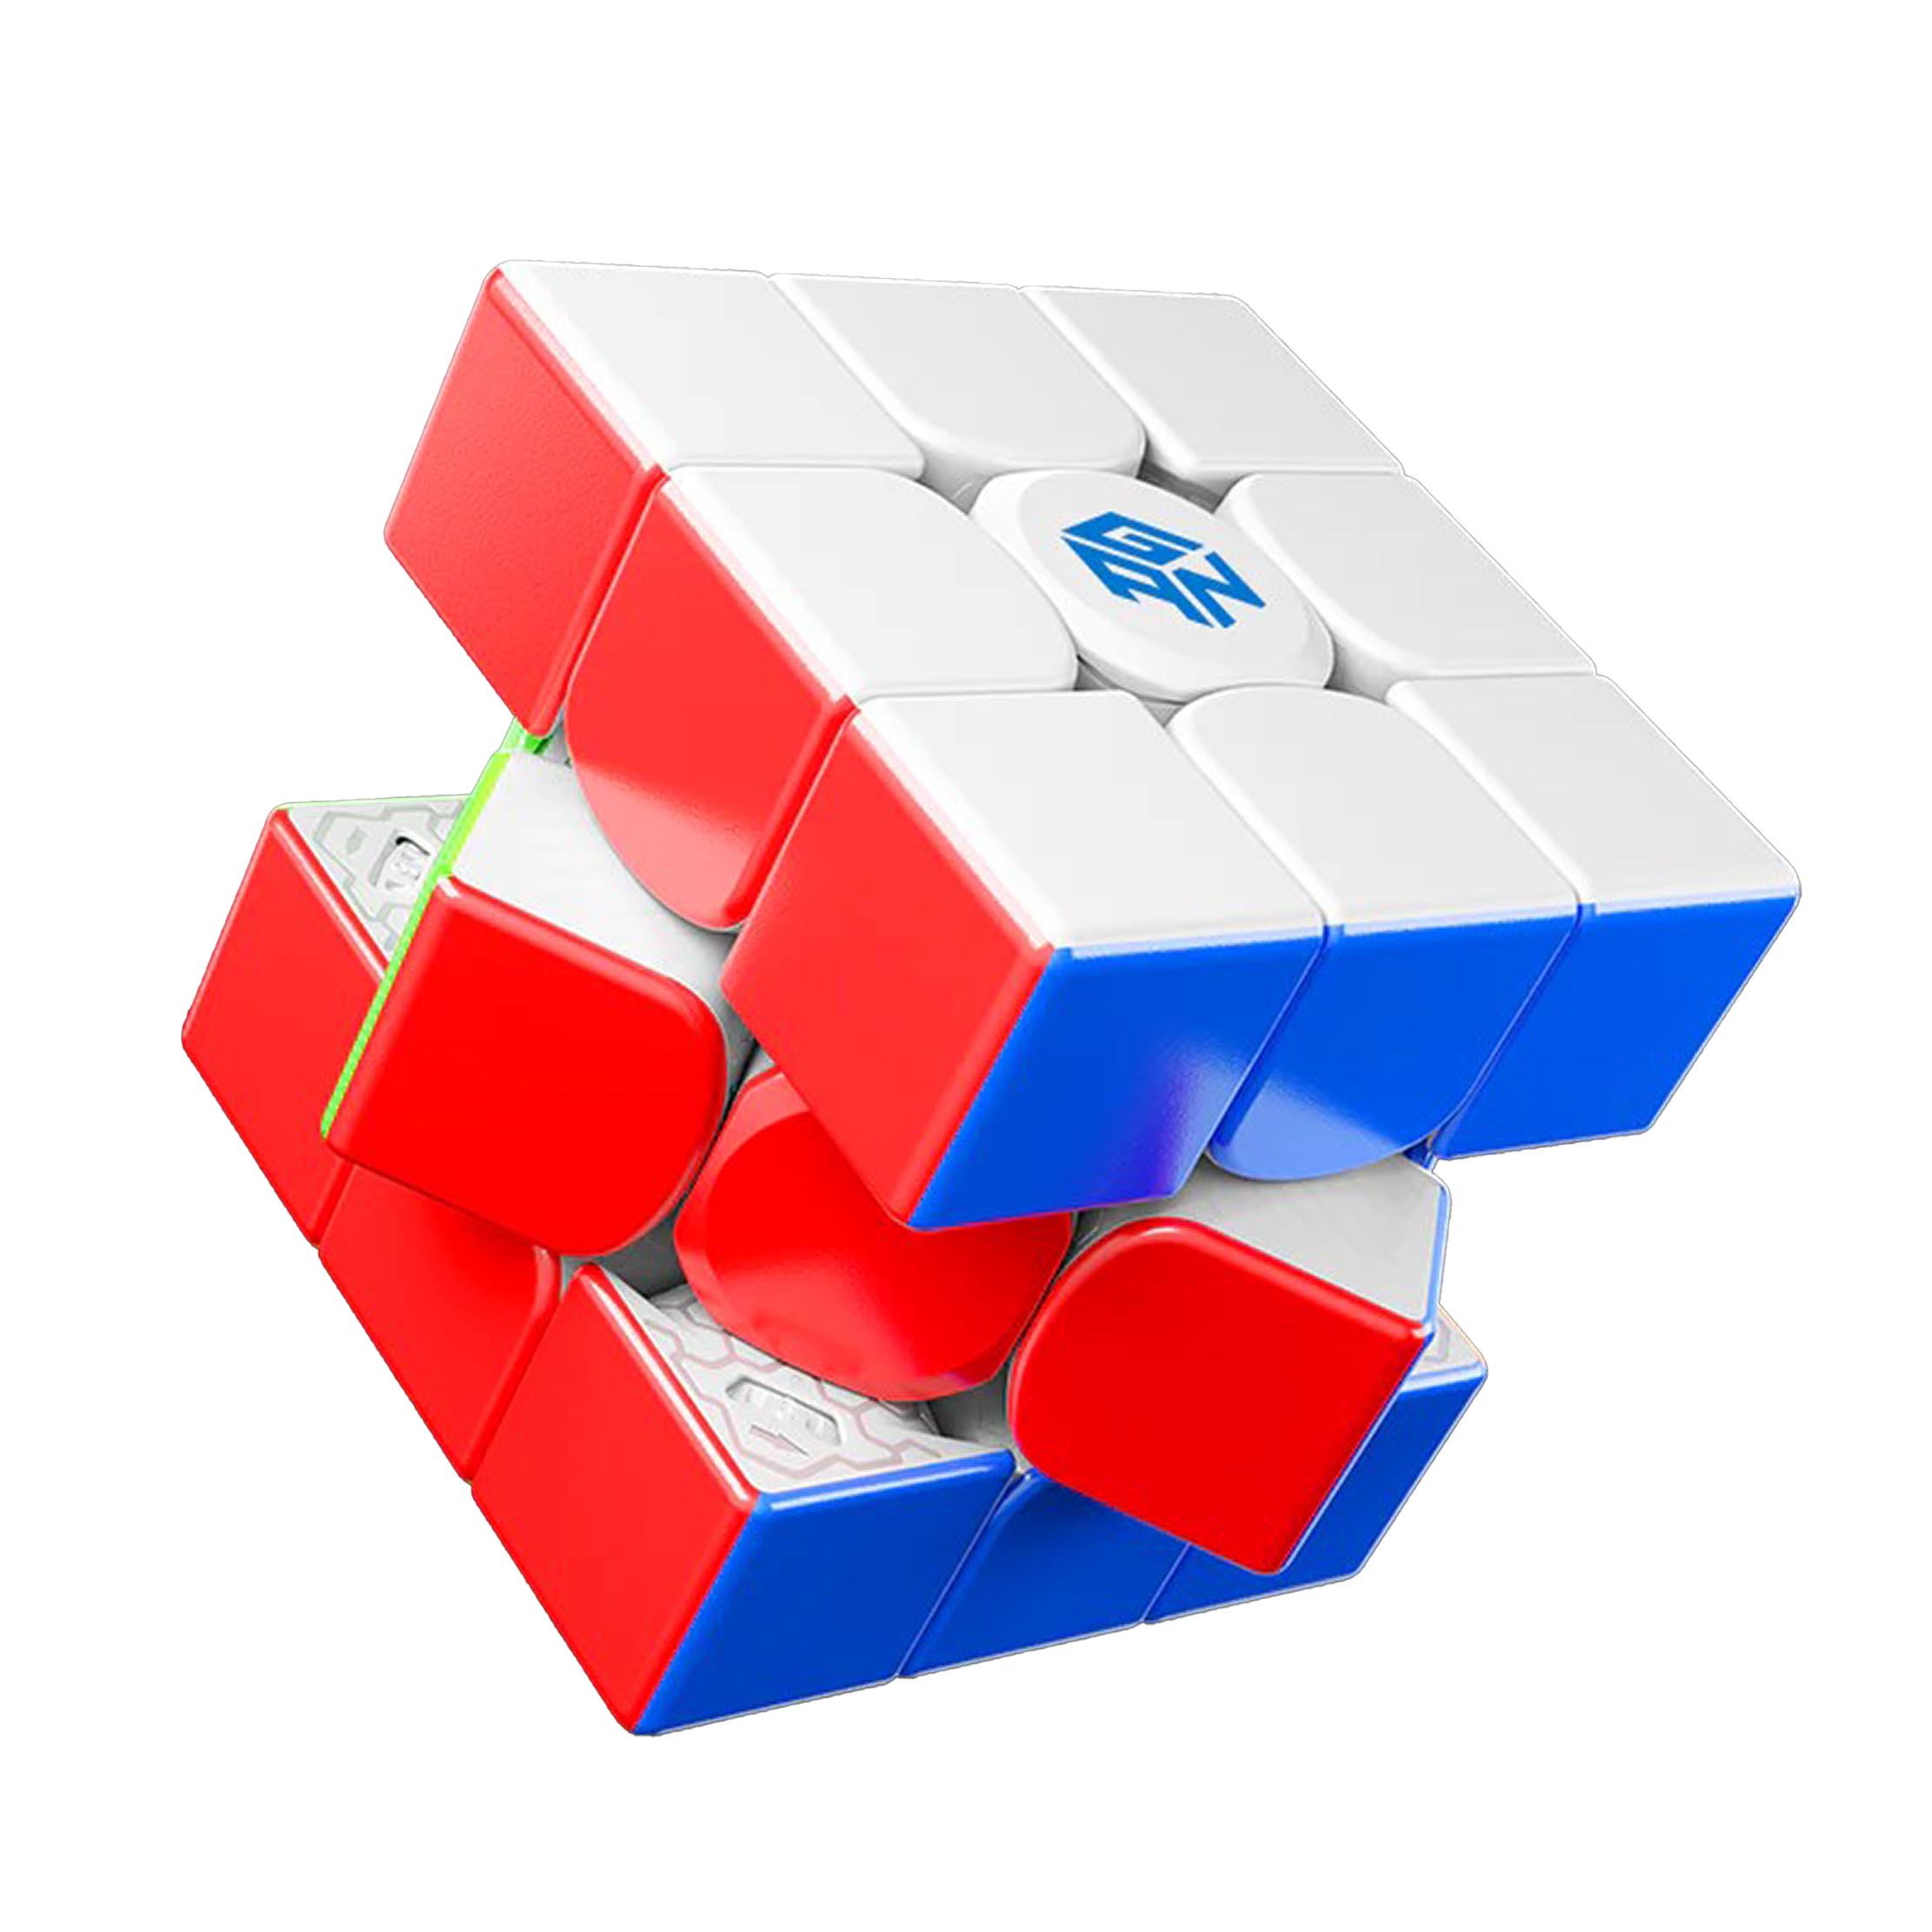 GAN 13 3x3 Maglev Speed Cube (Customized)